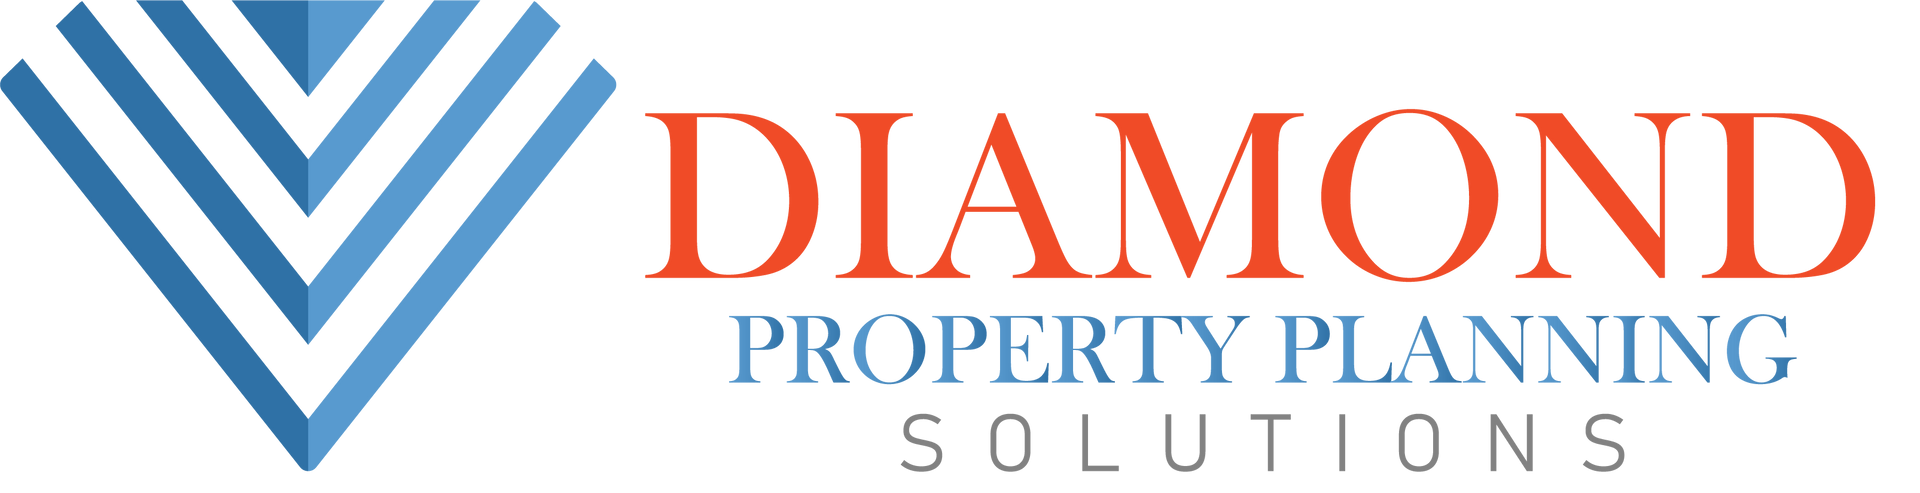 Diamond Property Planning Solutions